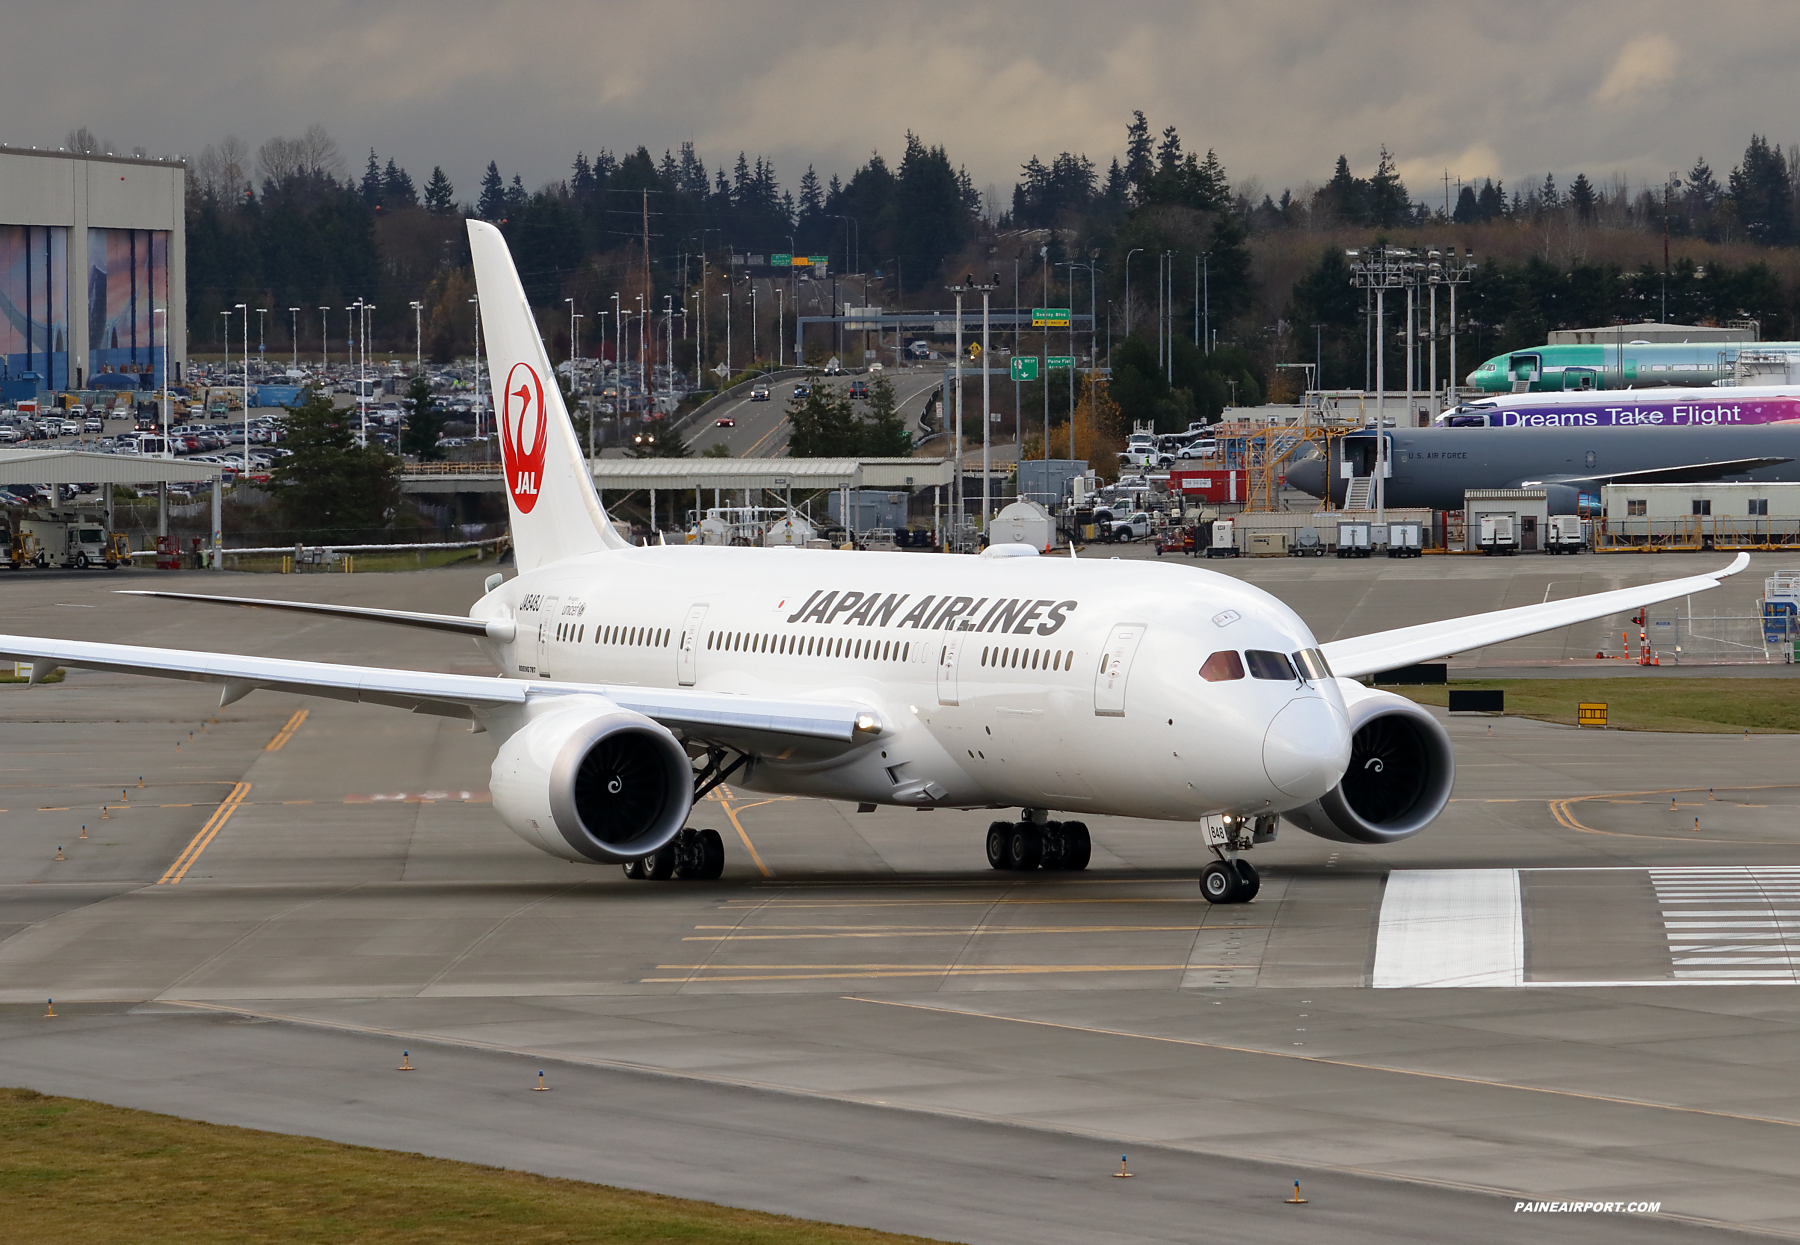 Japan Airlines 787-8 JA848J at Paine Field